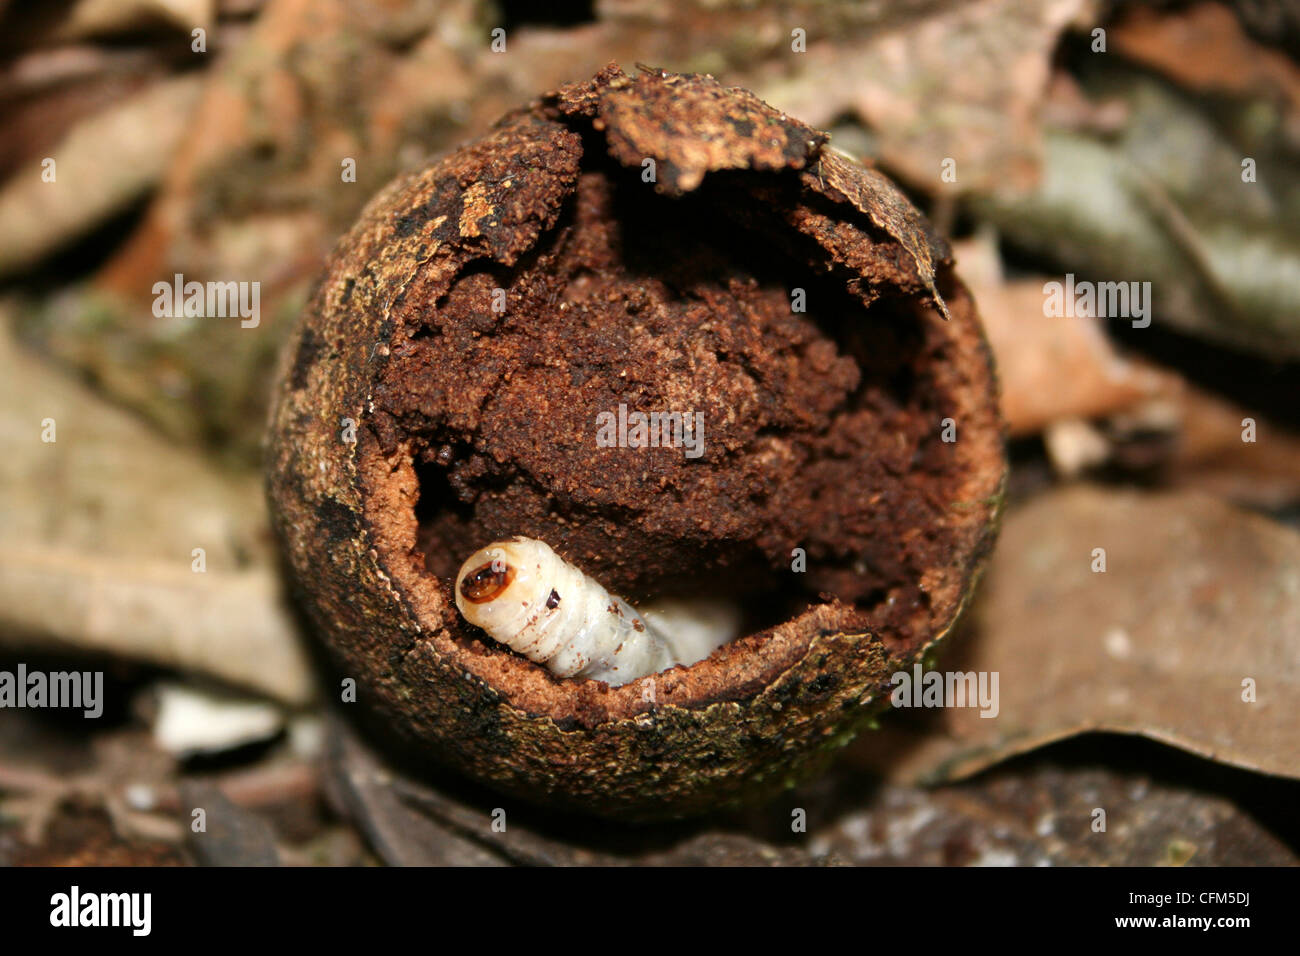 A White Grub Feeding In The Poisonous Decomposed Manzanillo de la Muerte Fruit (Little Apple of Death) Of The Manchineel Tree Stock Photo